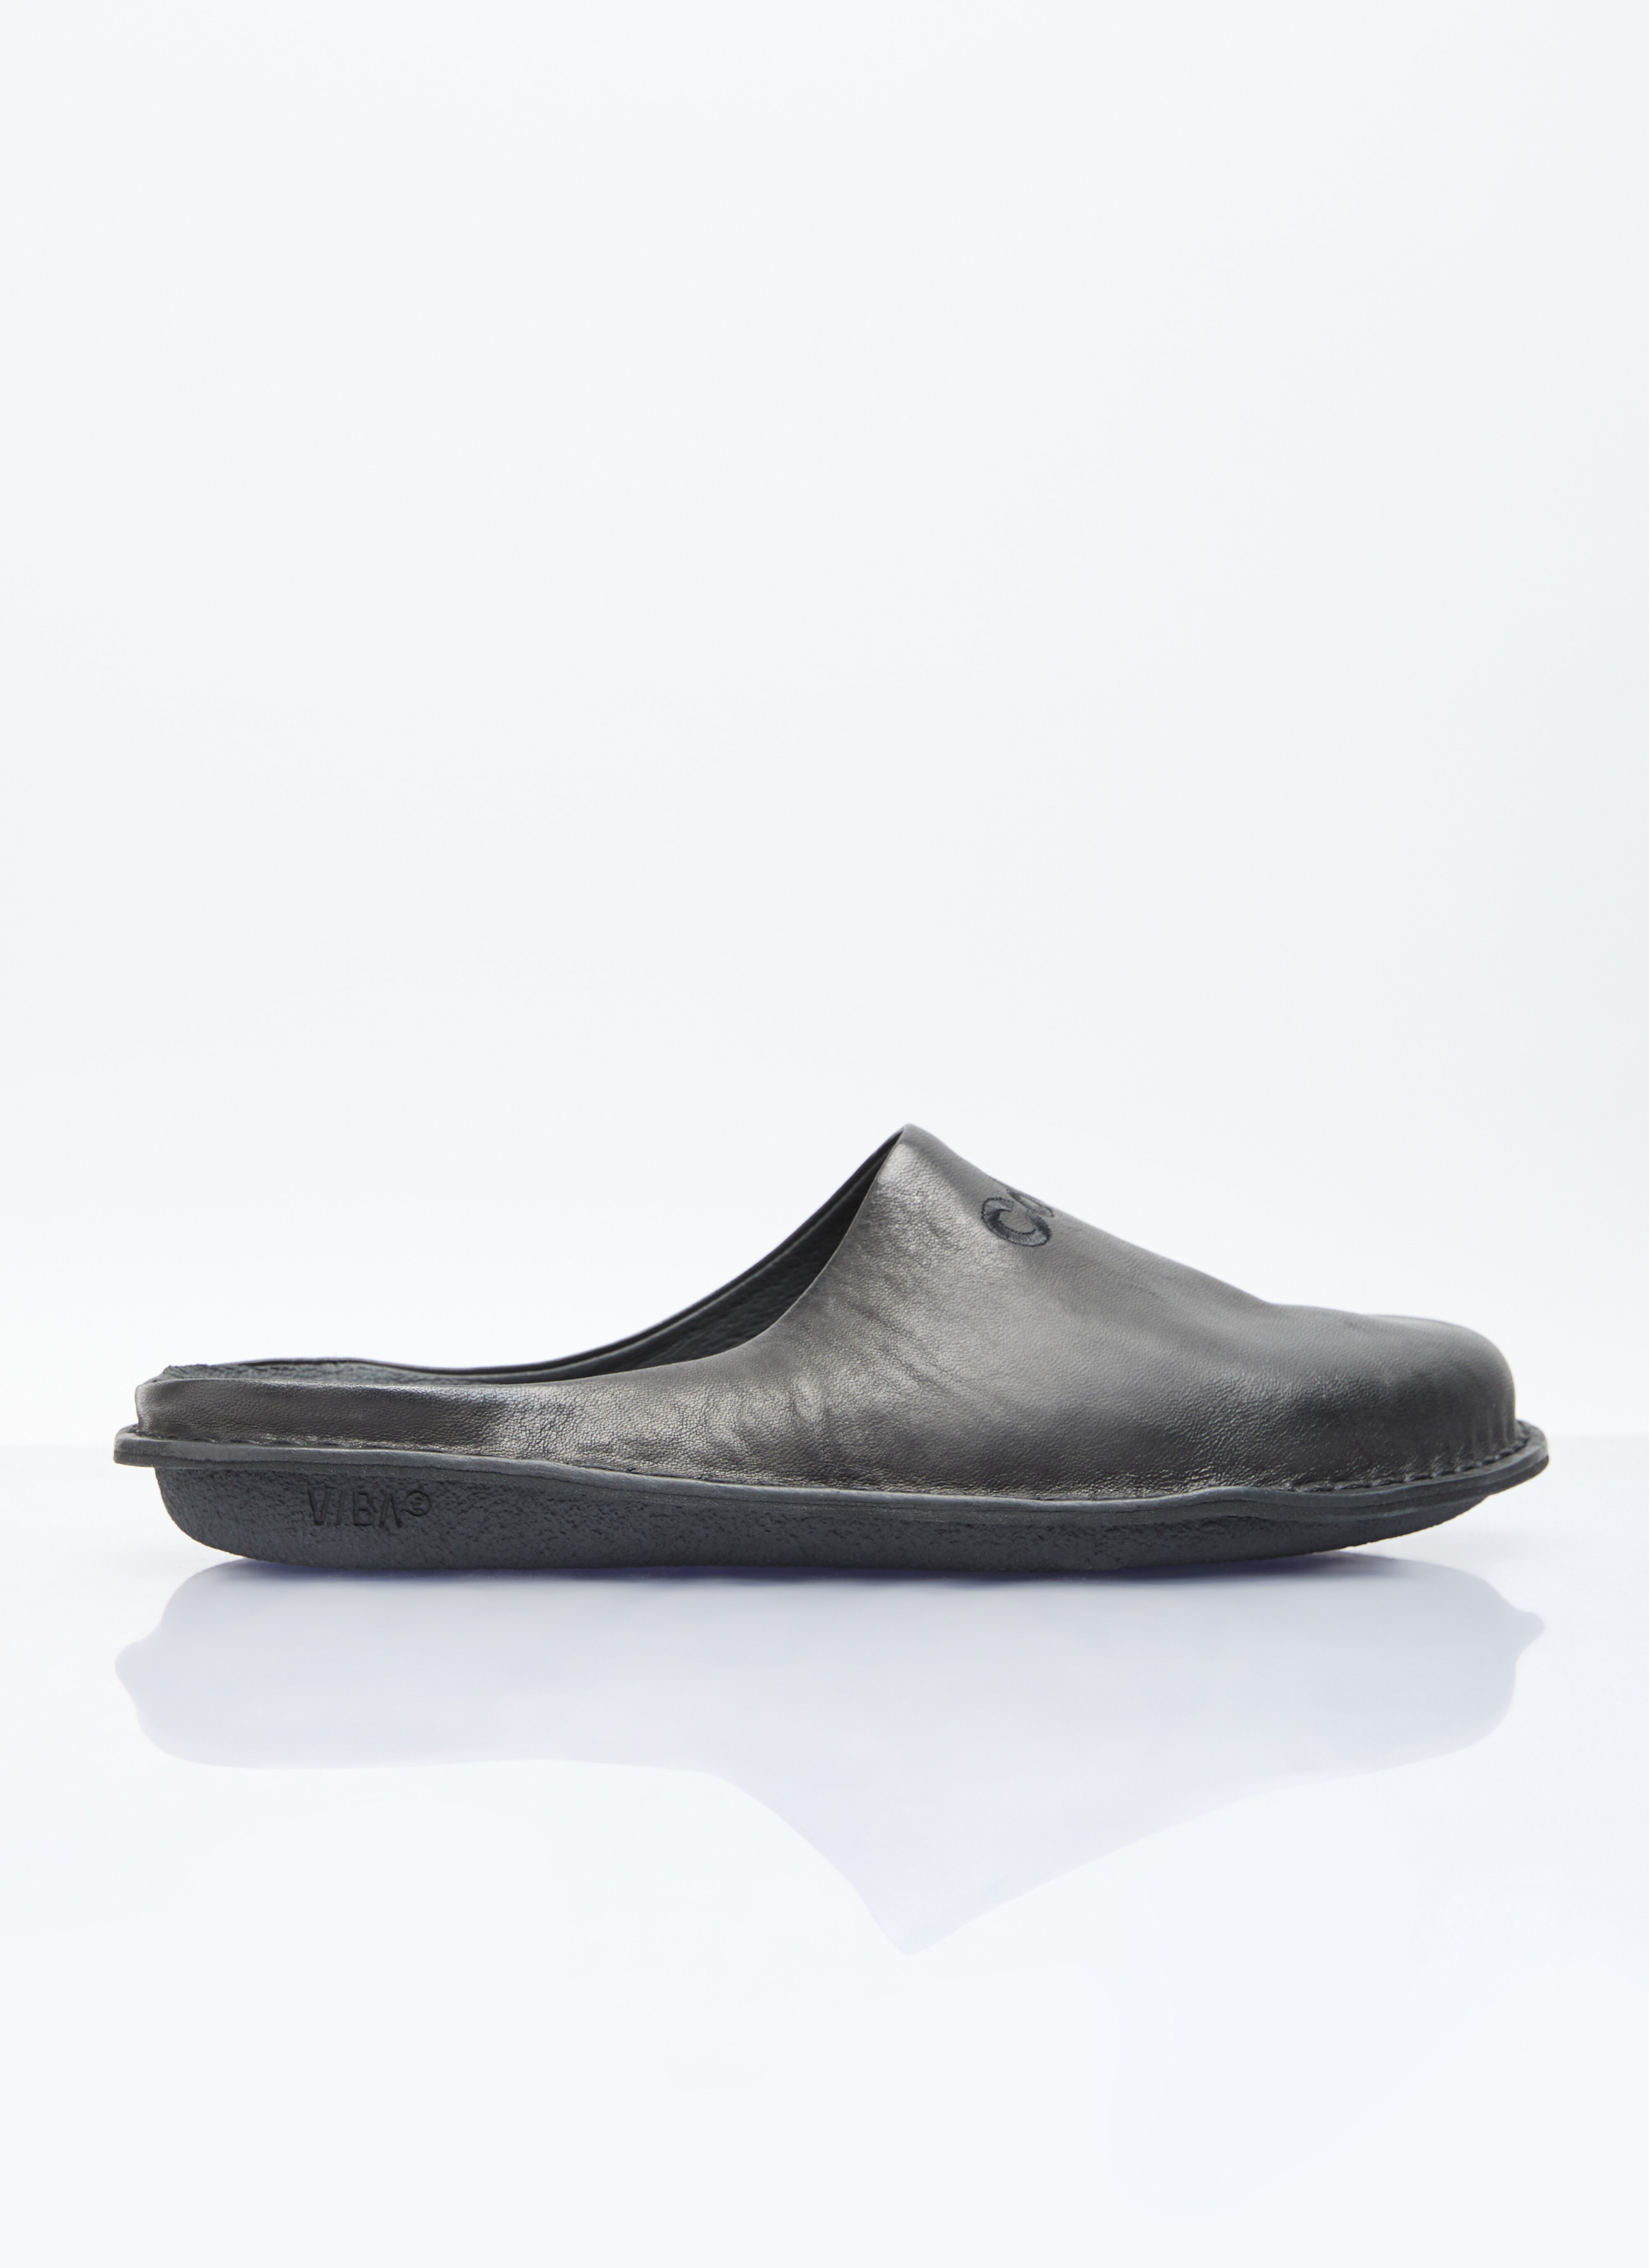 Comme des Garçons Homme x New Balance 皮革便鞋 黑色 cgn0156001